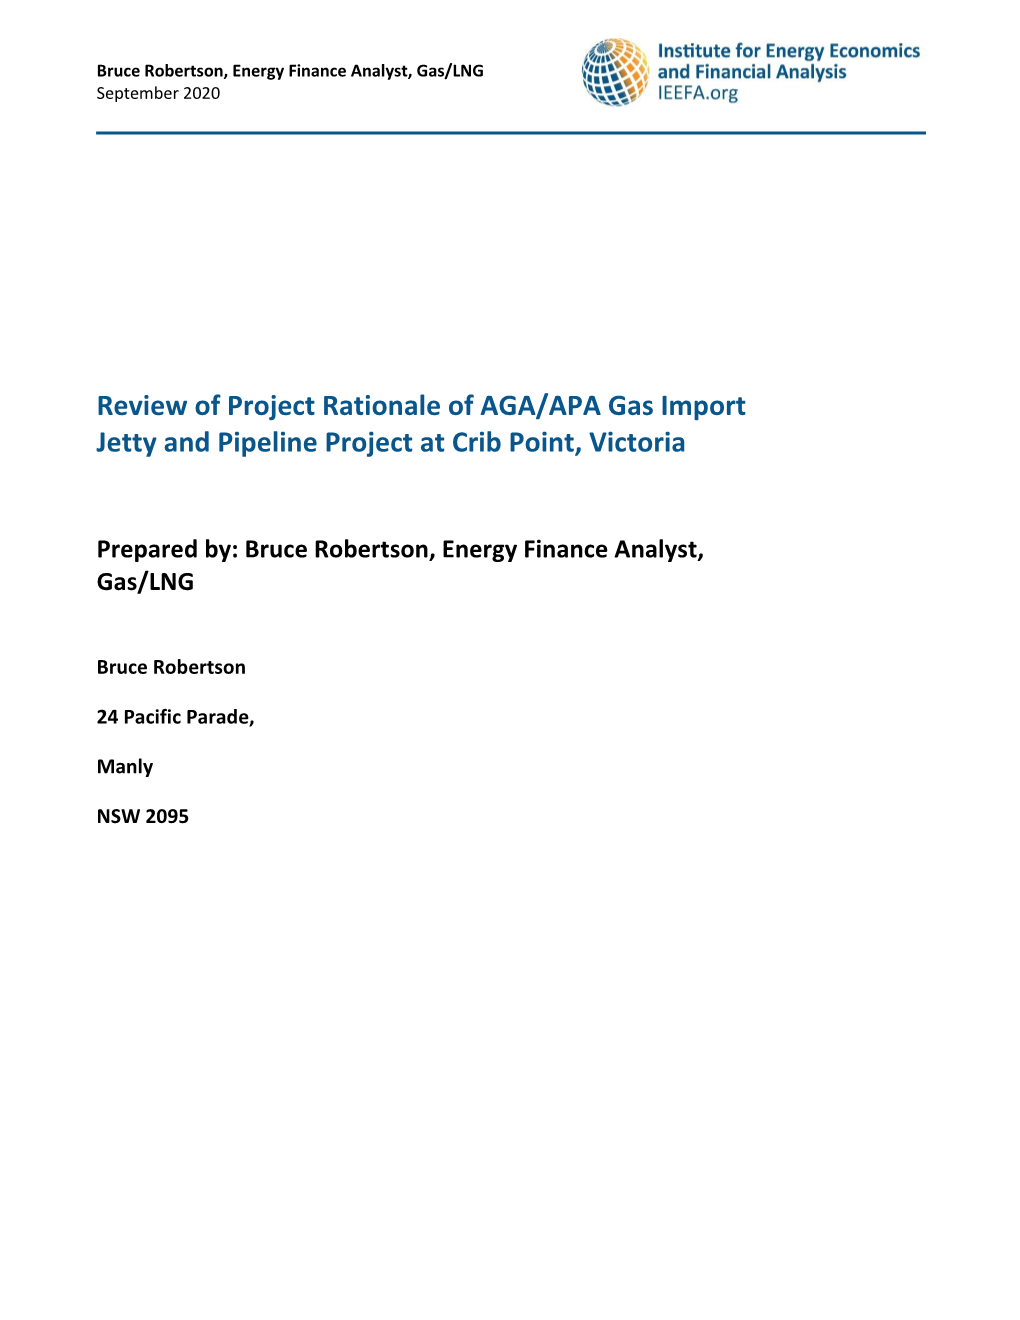 Bruce Robertson, Energy Finance Analyst, Gas/LNG September 2020